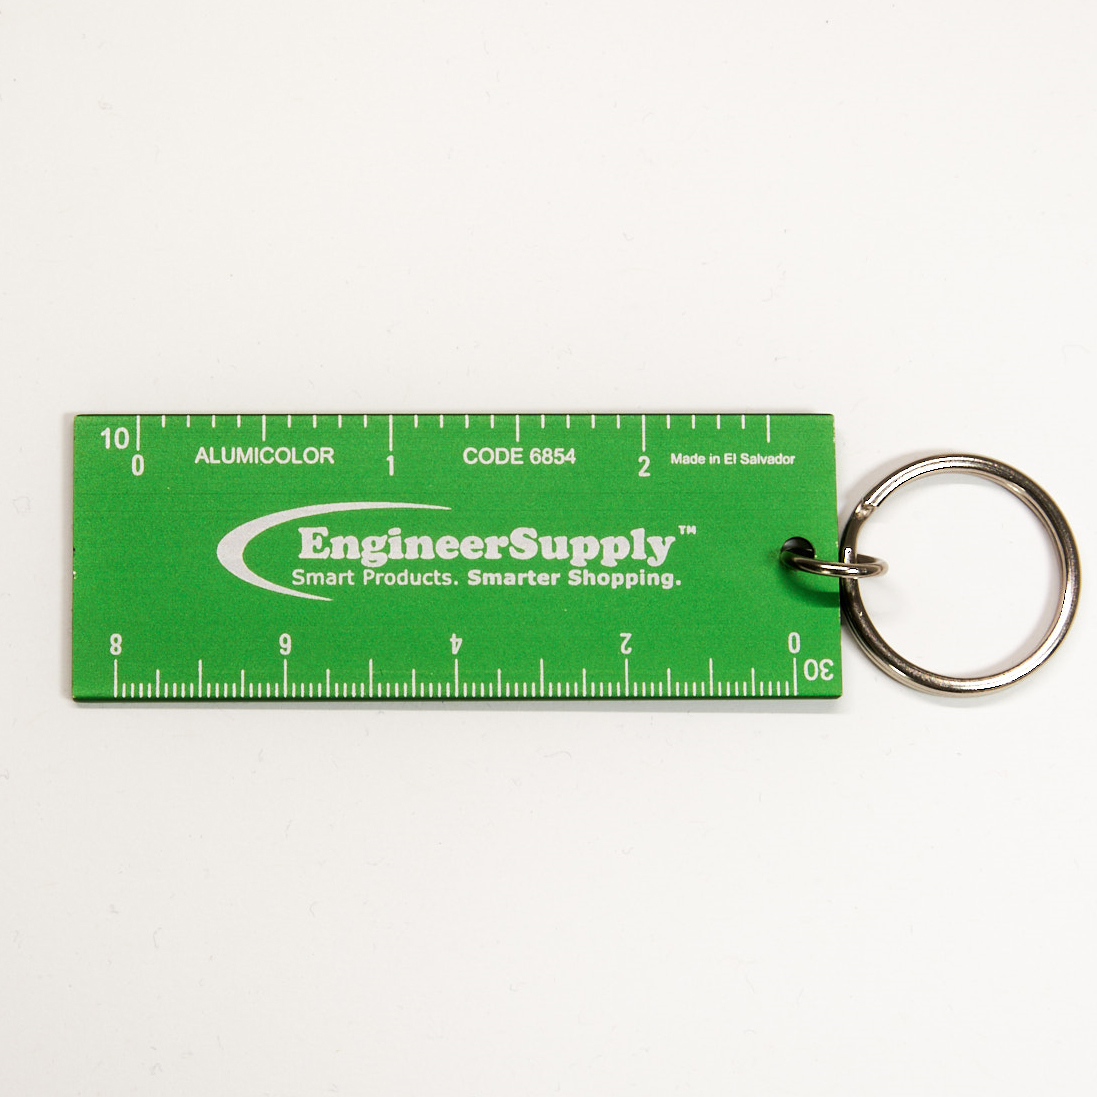 EngineerSupply Ruler Keychain